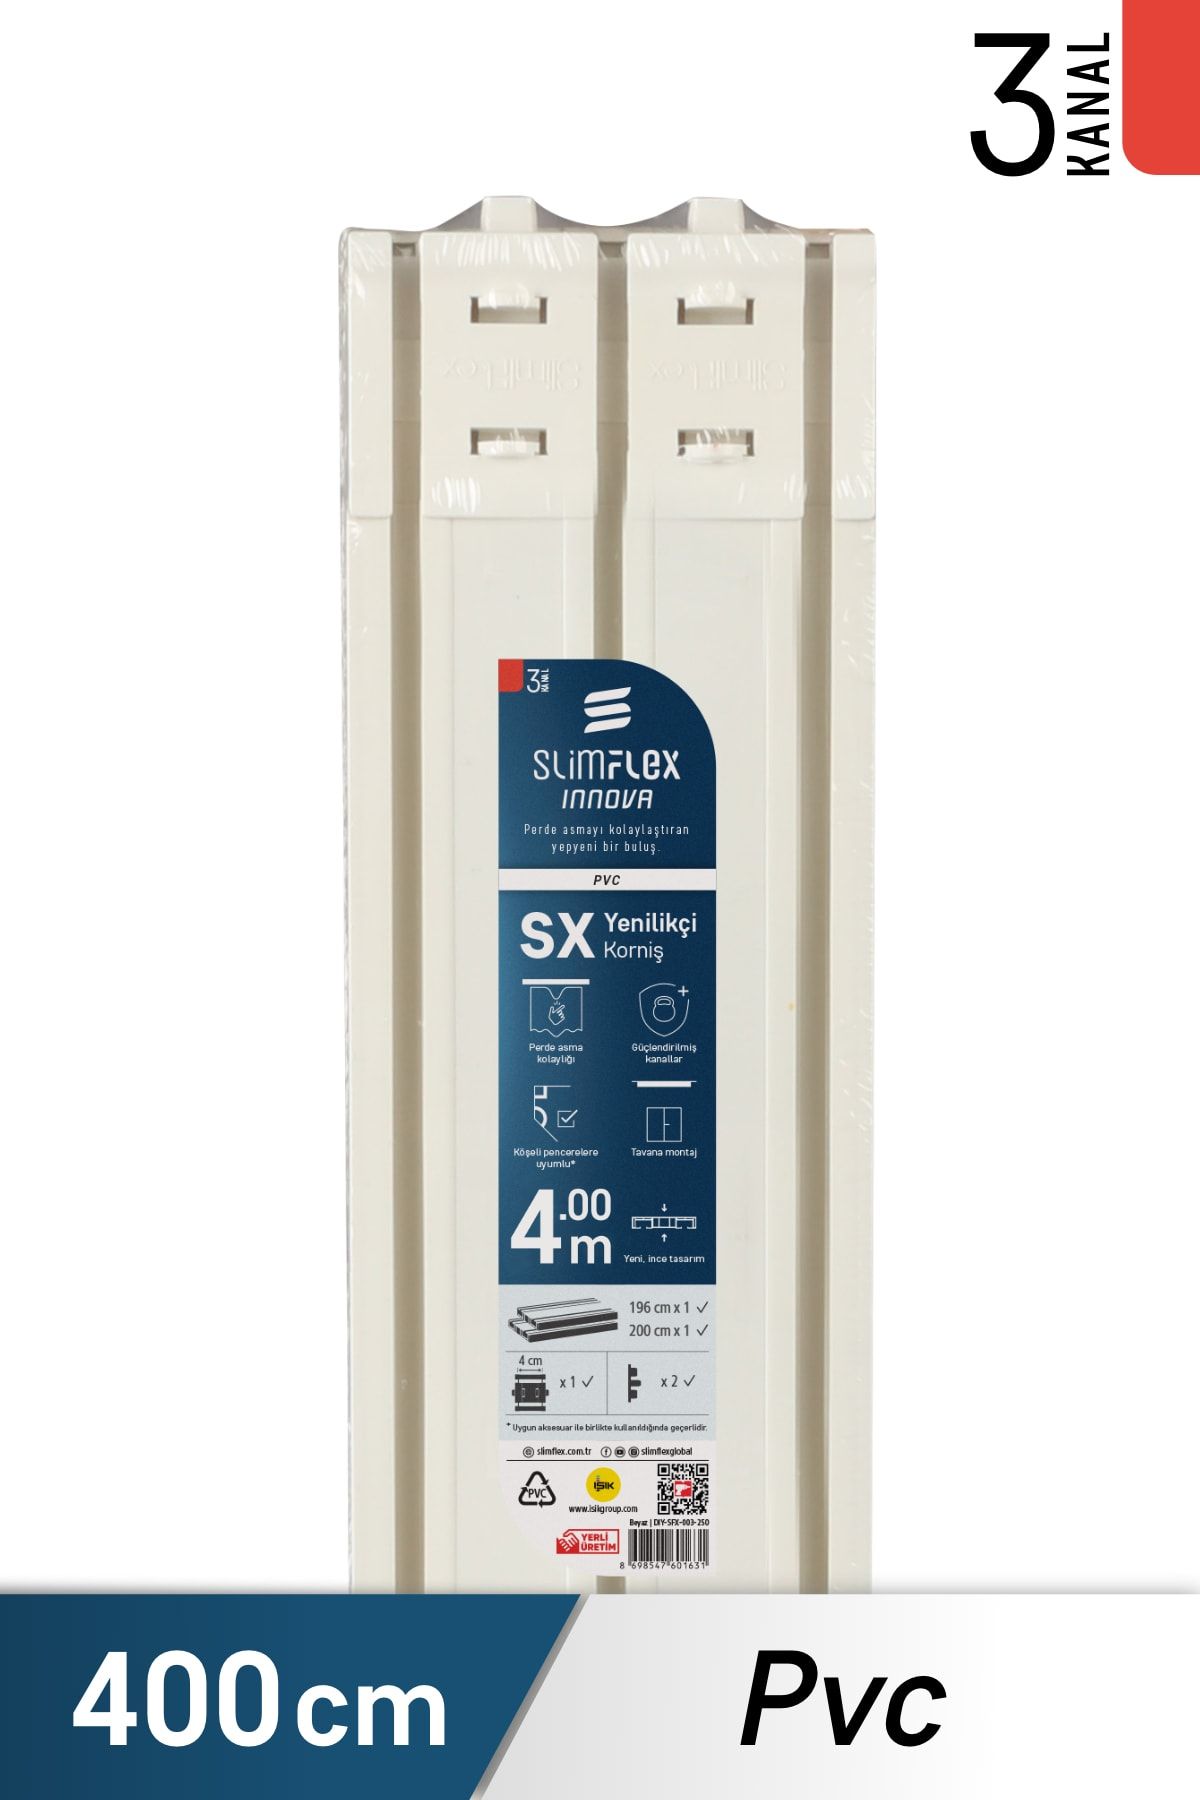 SlimFlex Innova SX Yenilikçi PVC Korniş 3-Kanallı 400 cm